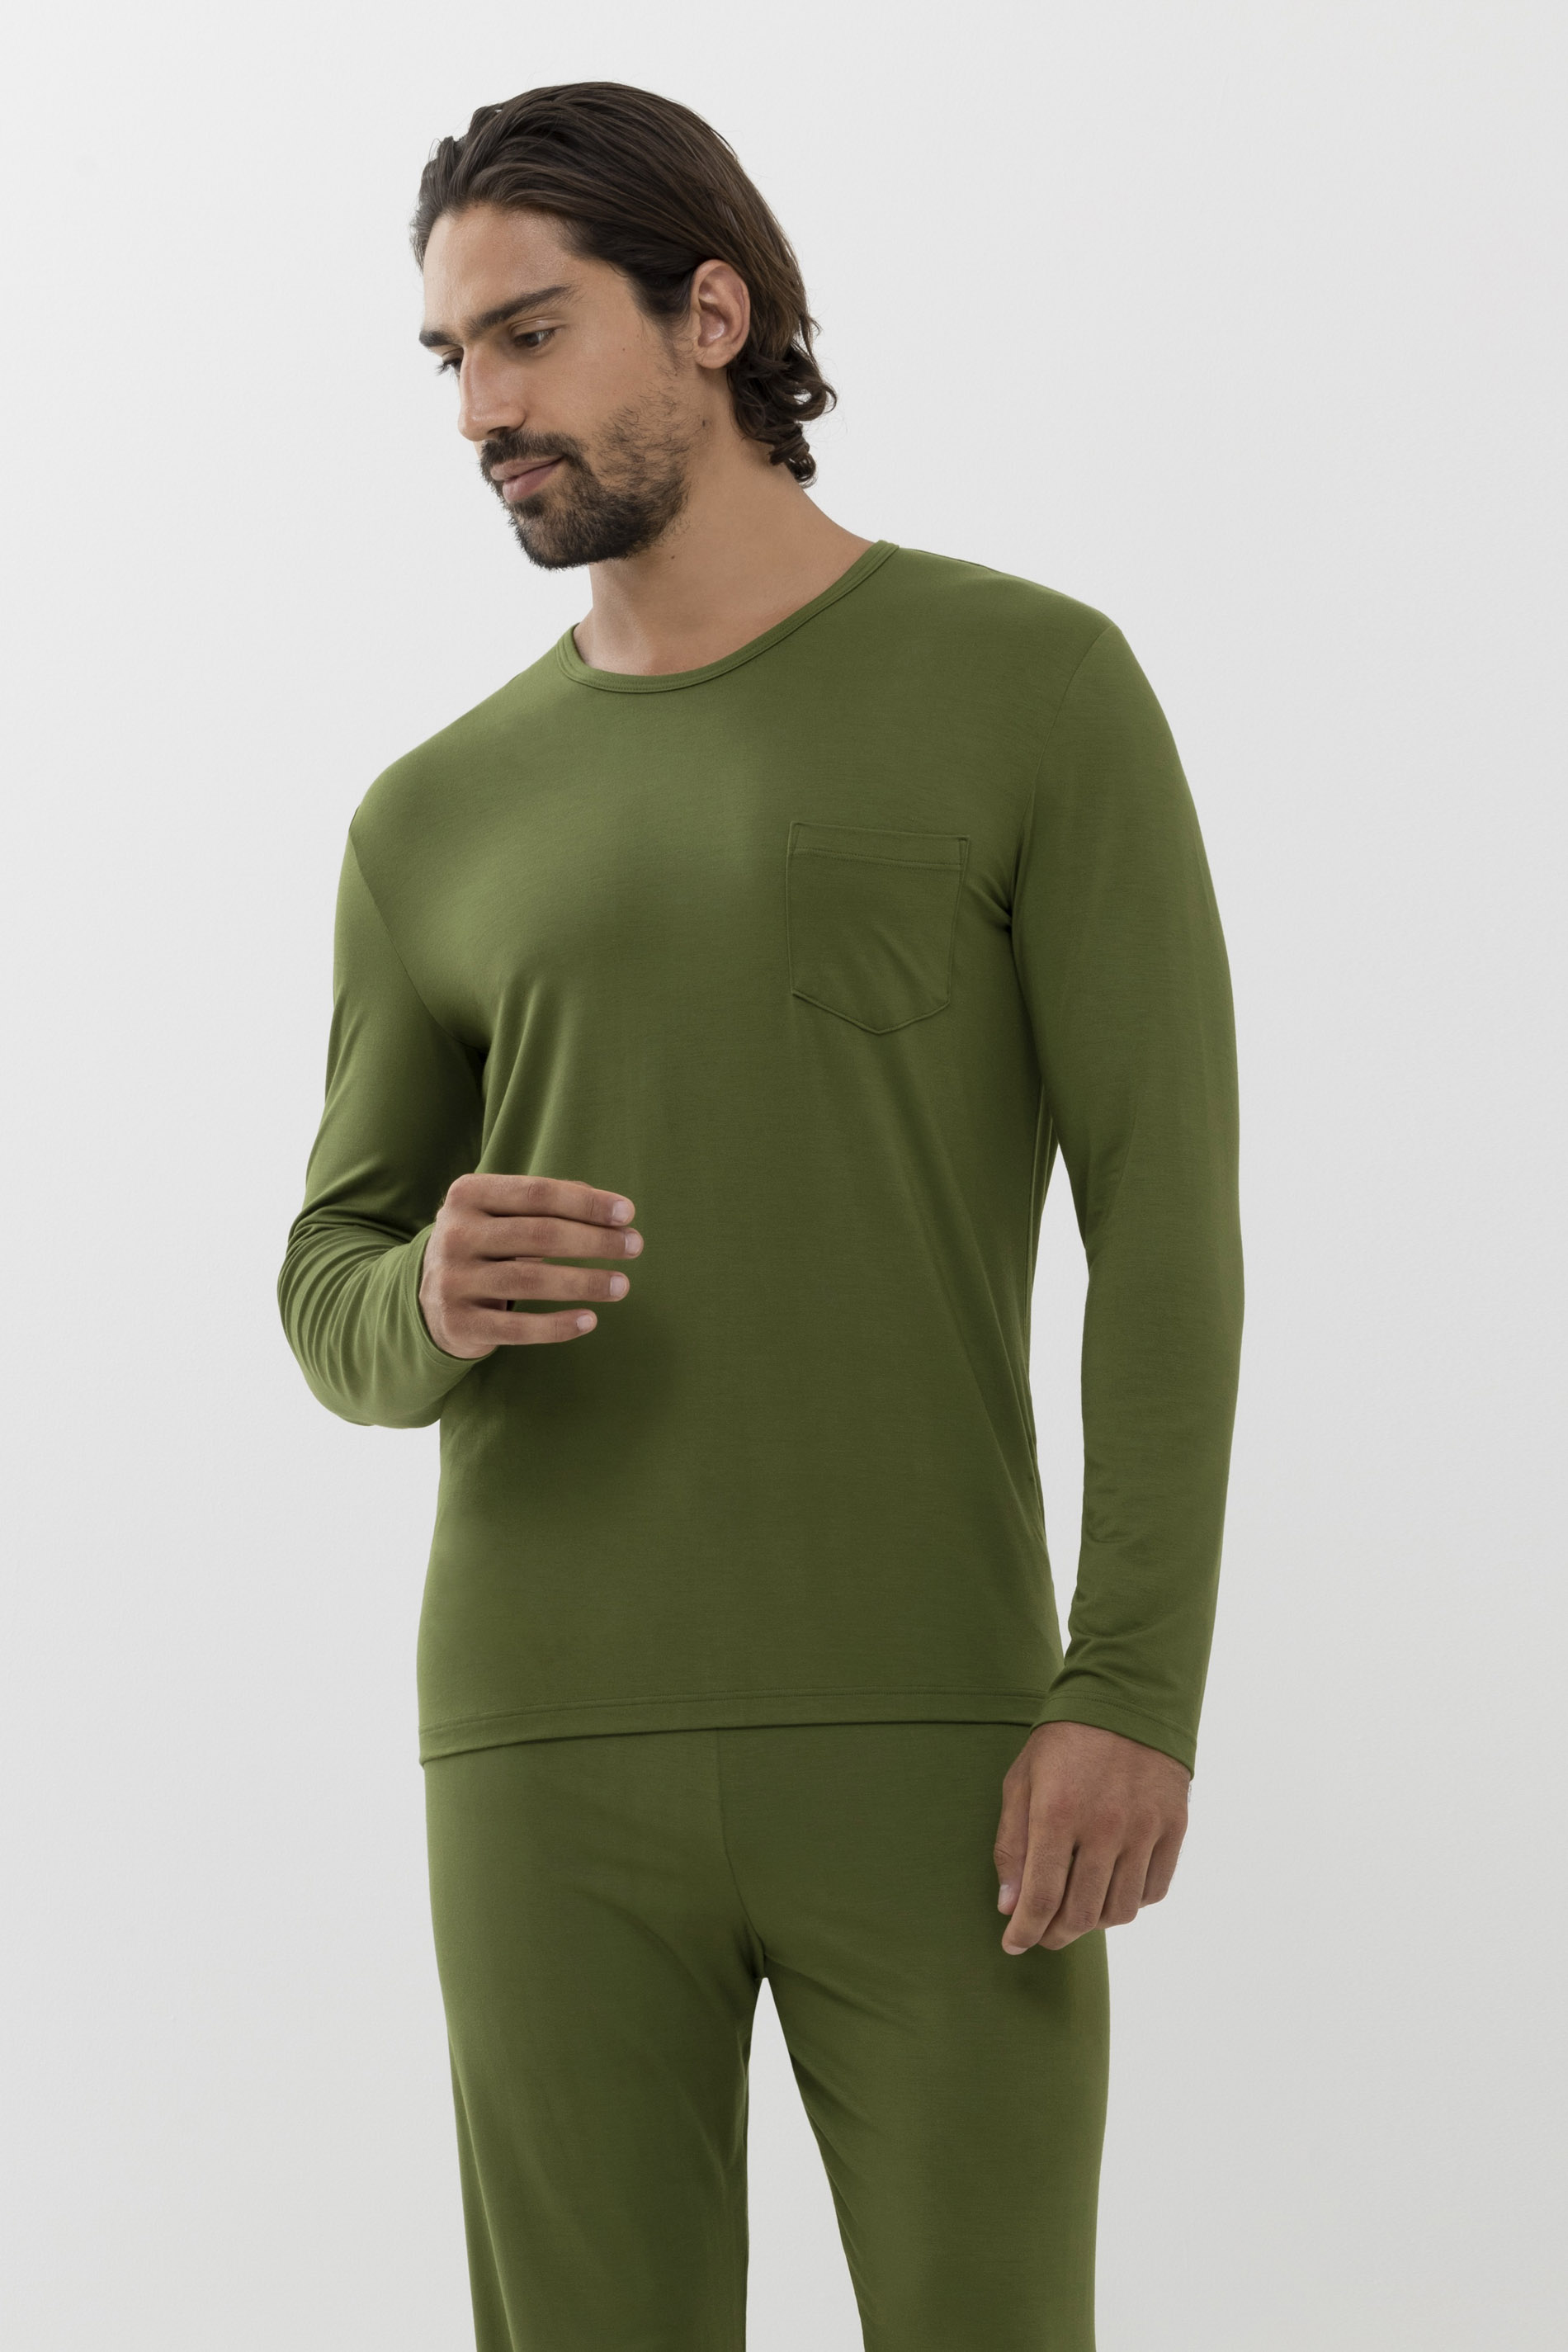 Langarm-Shirt Serie Jefferson Modal Frontansicht | mey®